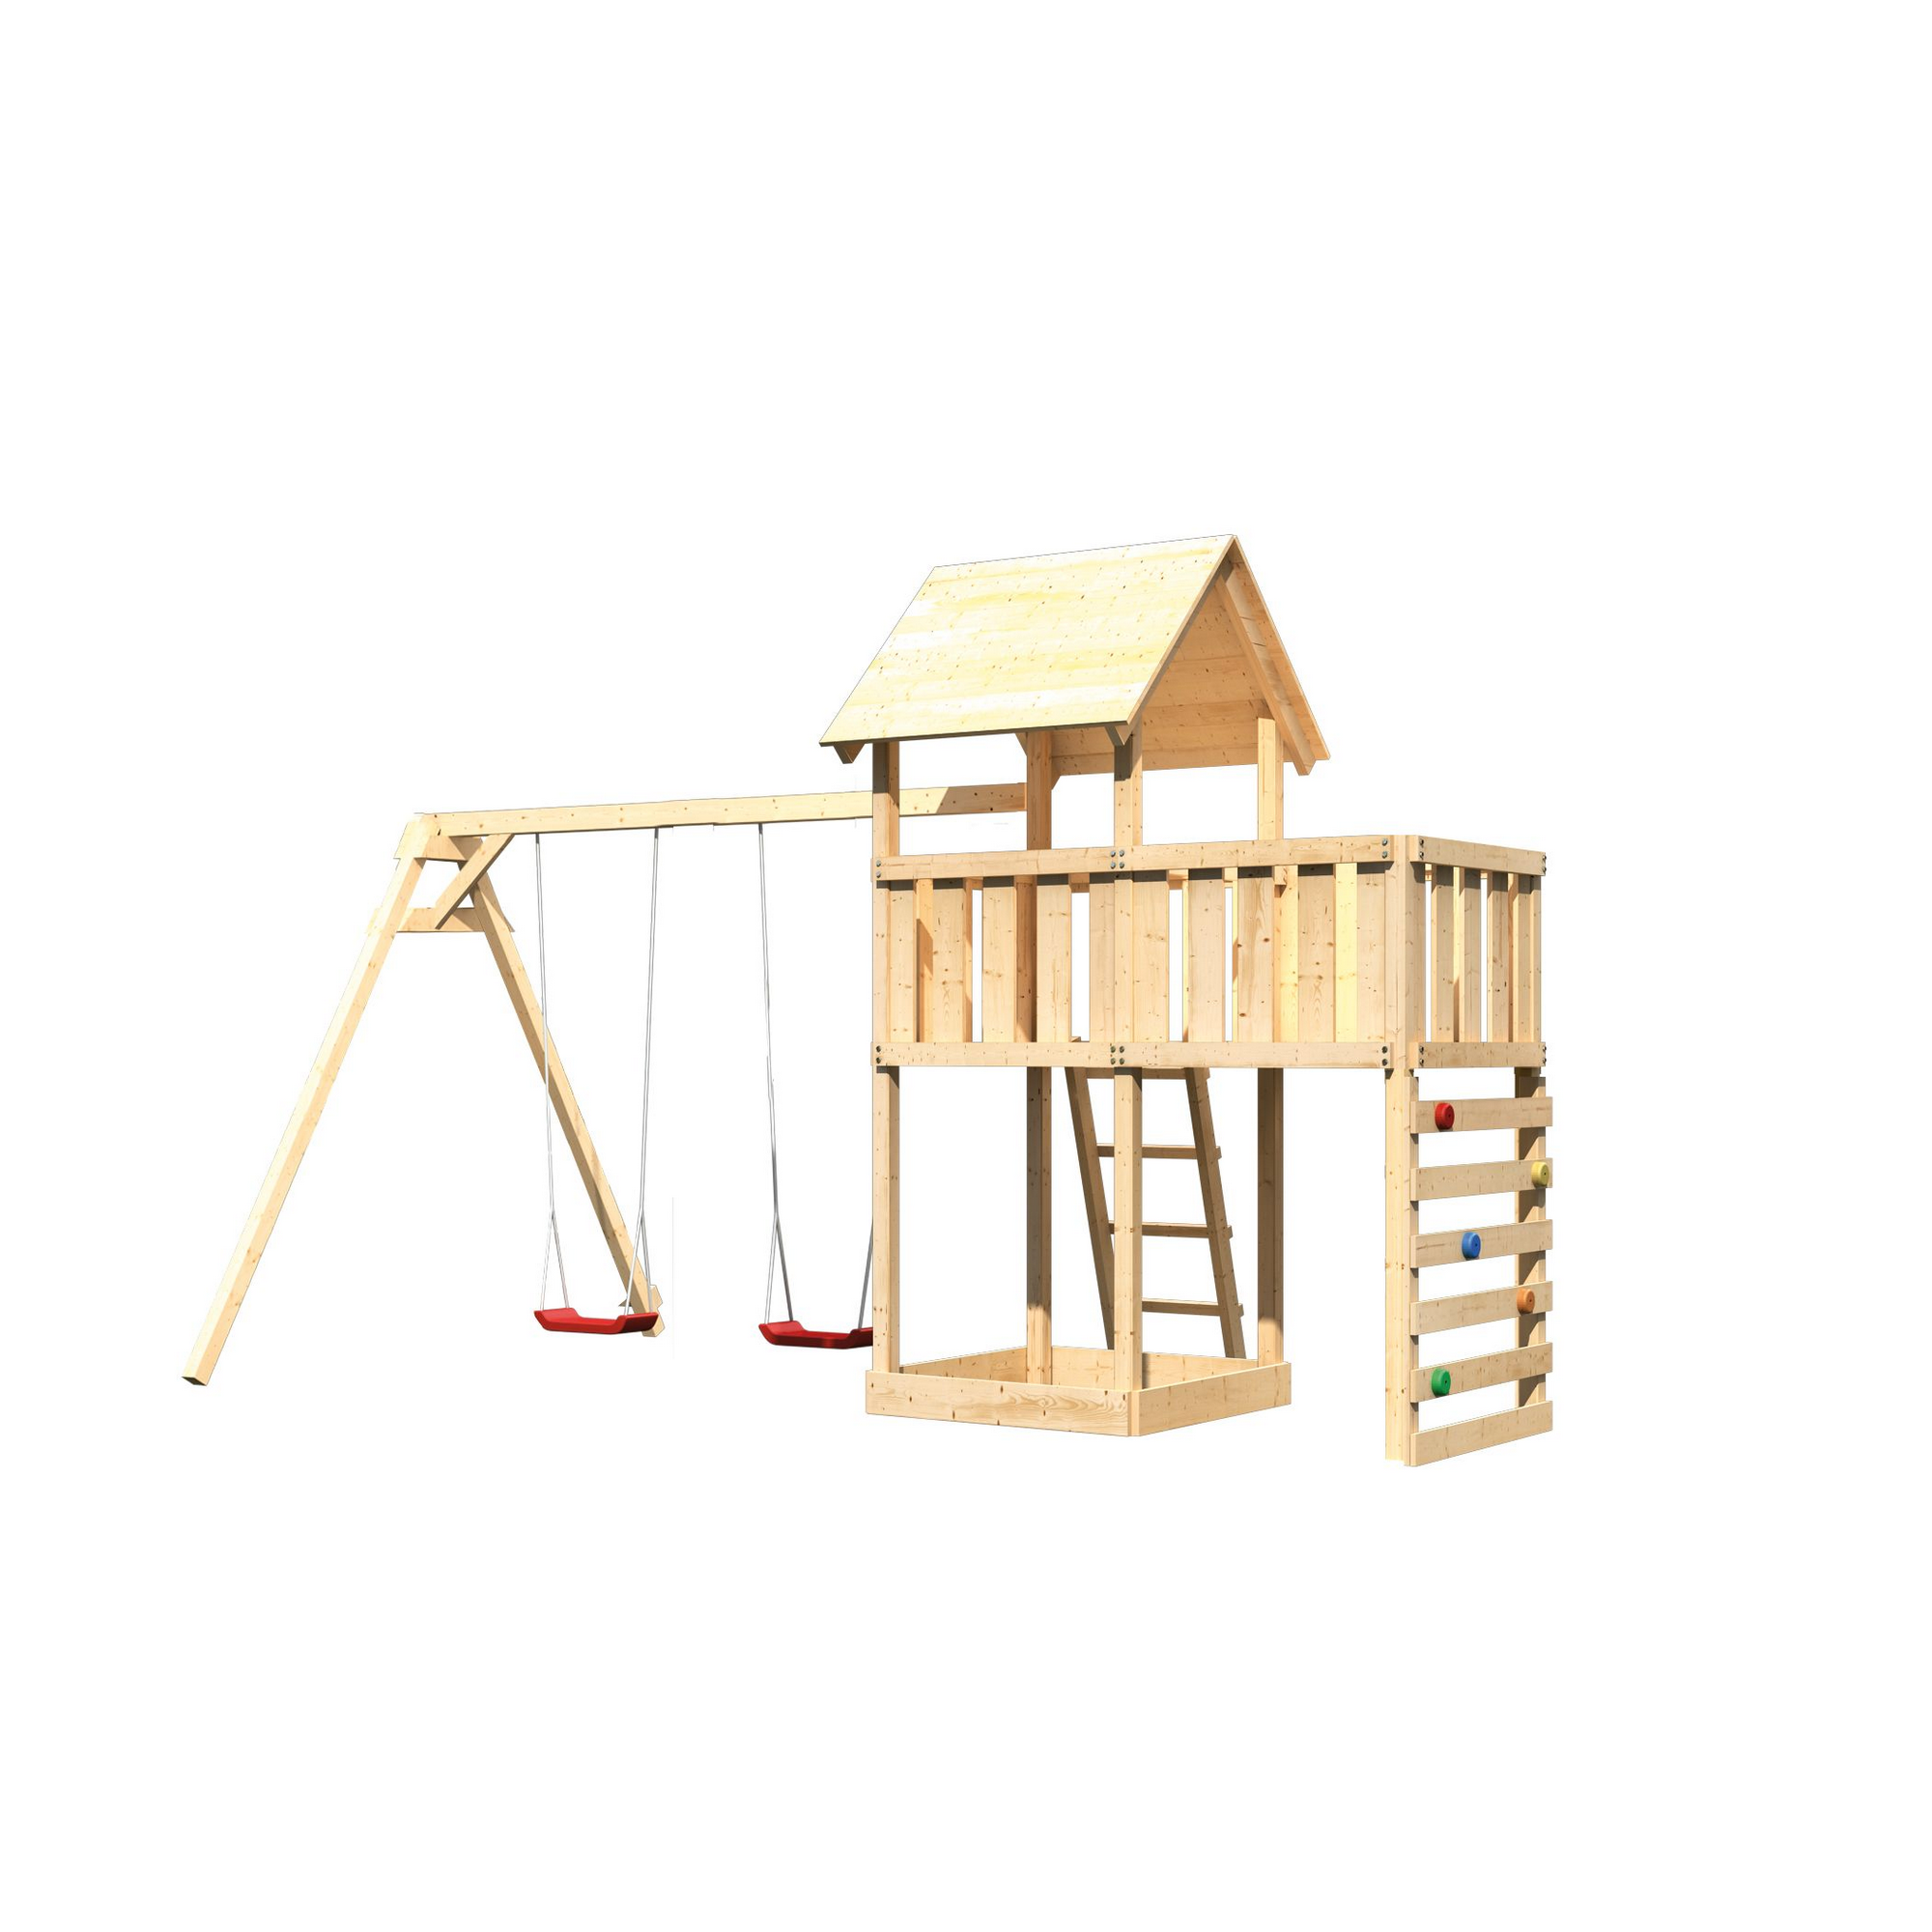 Kinderspielturm 'Lotti' naturbelassene nordische Fichte 107 x 291 x 107 cm + product picture